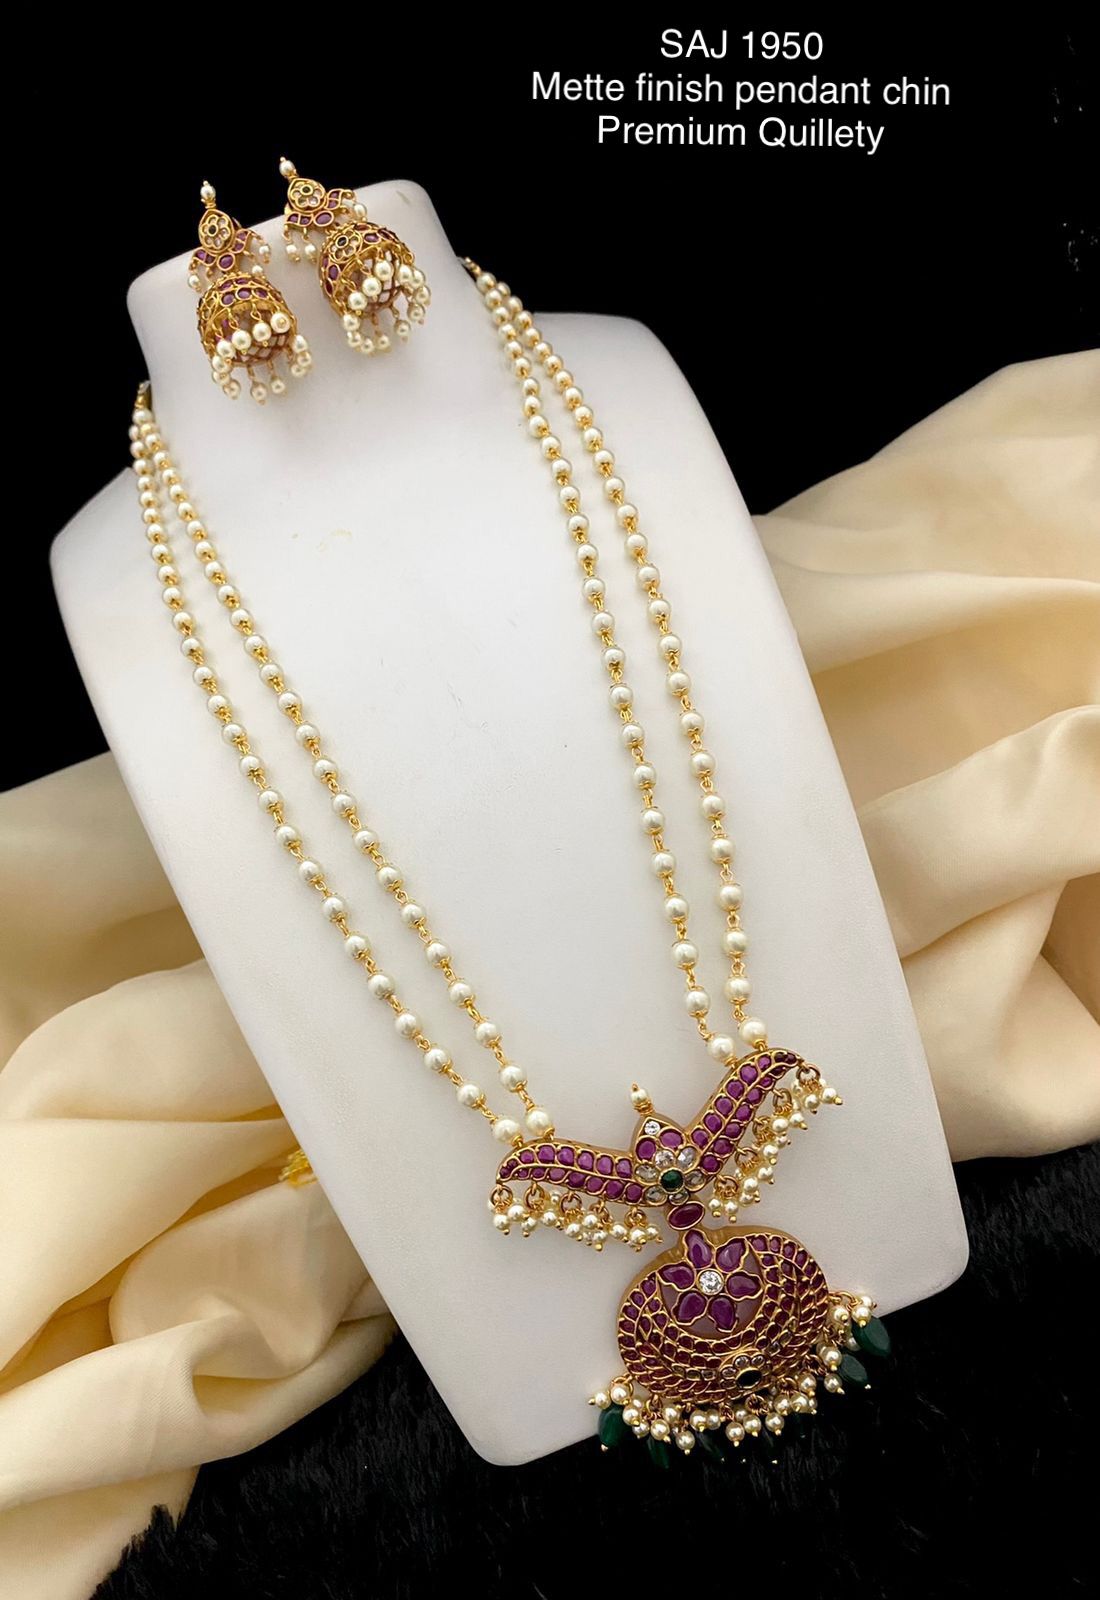 Buy Power Pearl Pendant Necklace Online in India | Zariin